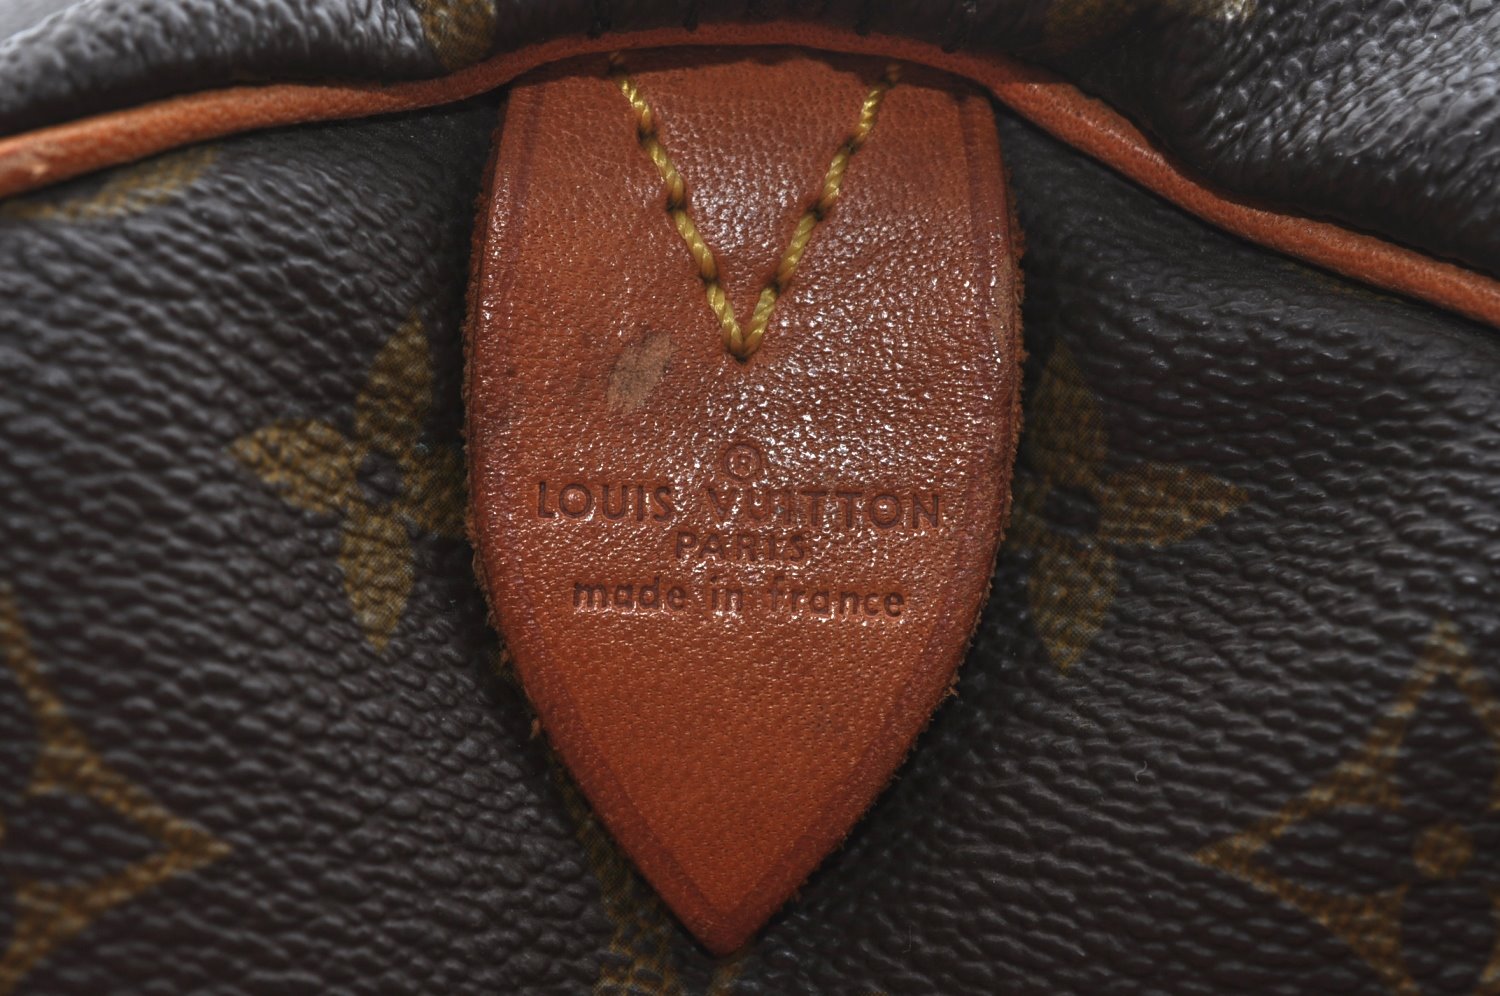 Authentic Louis Vuitton Monogram Keepall 60 Travel Boston Bag Old Model LV K9756